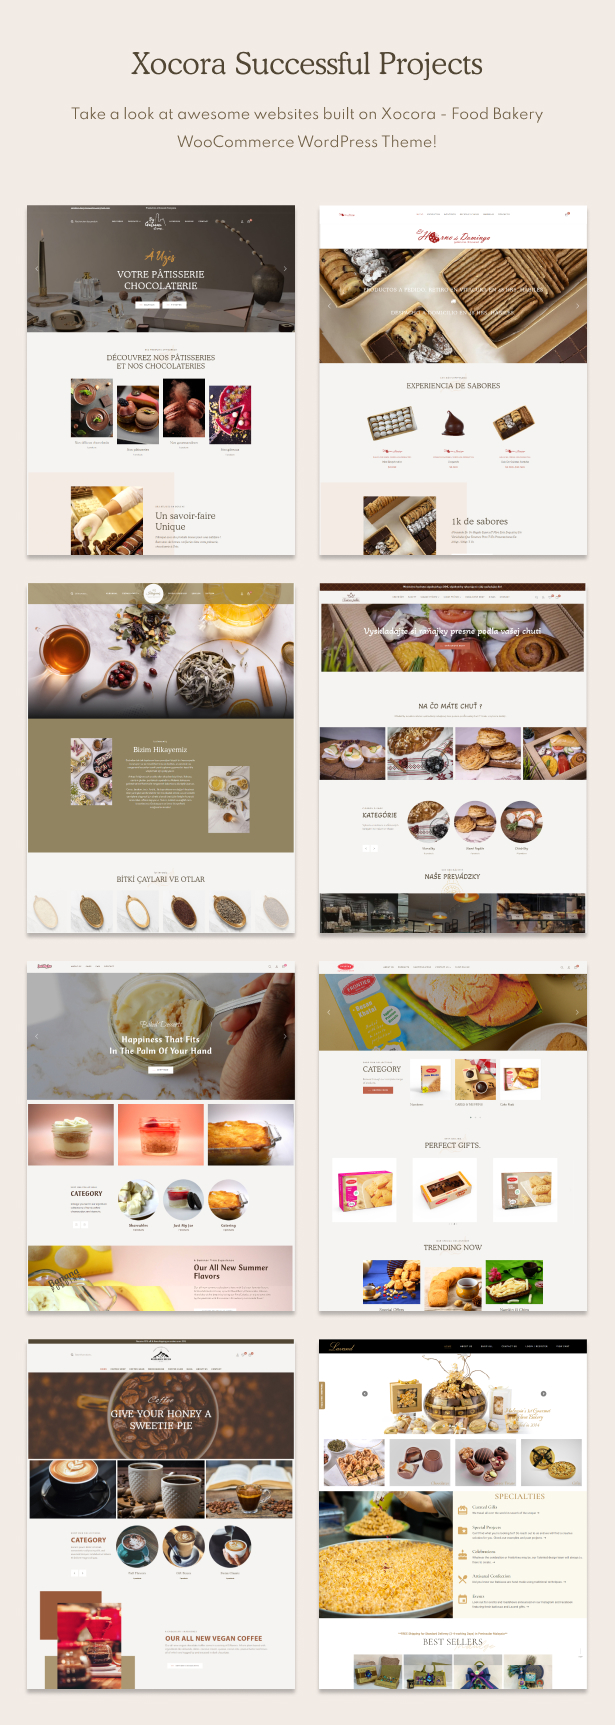 Xocora - Food Bakery WooCommerce WordPress Theme Showcase